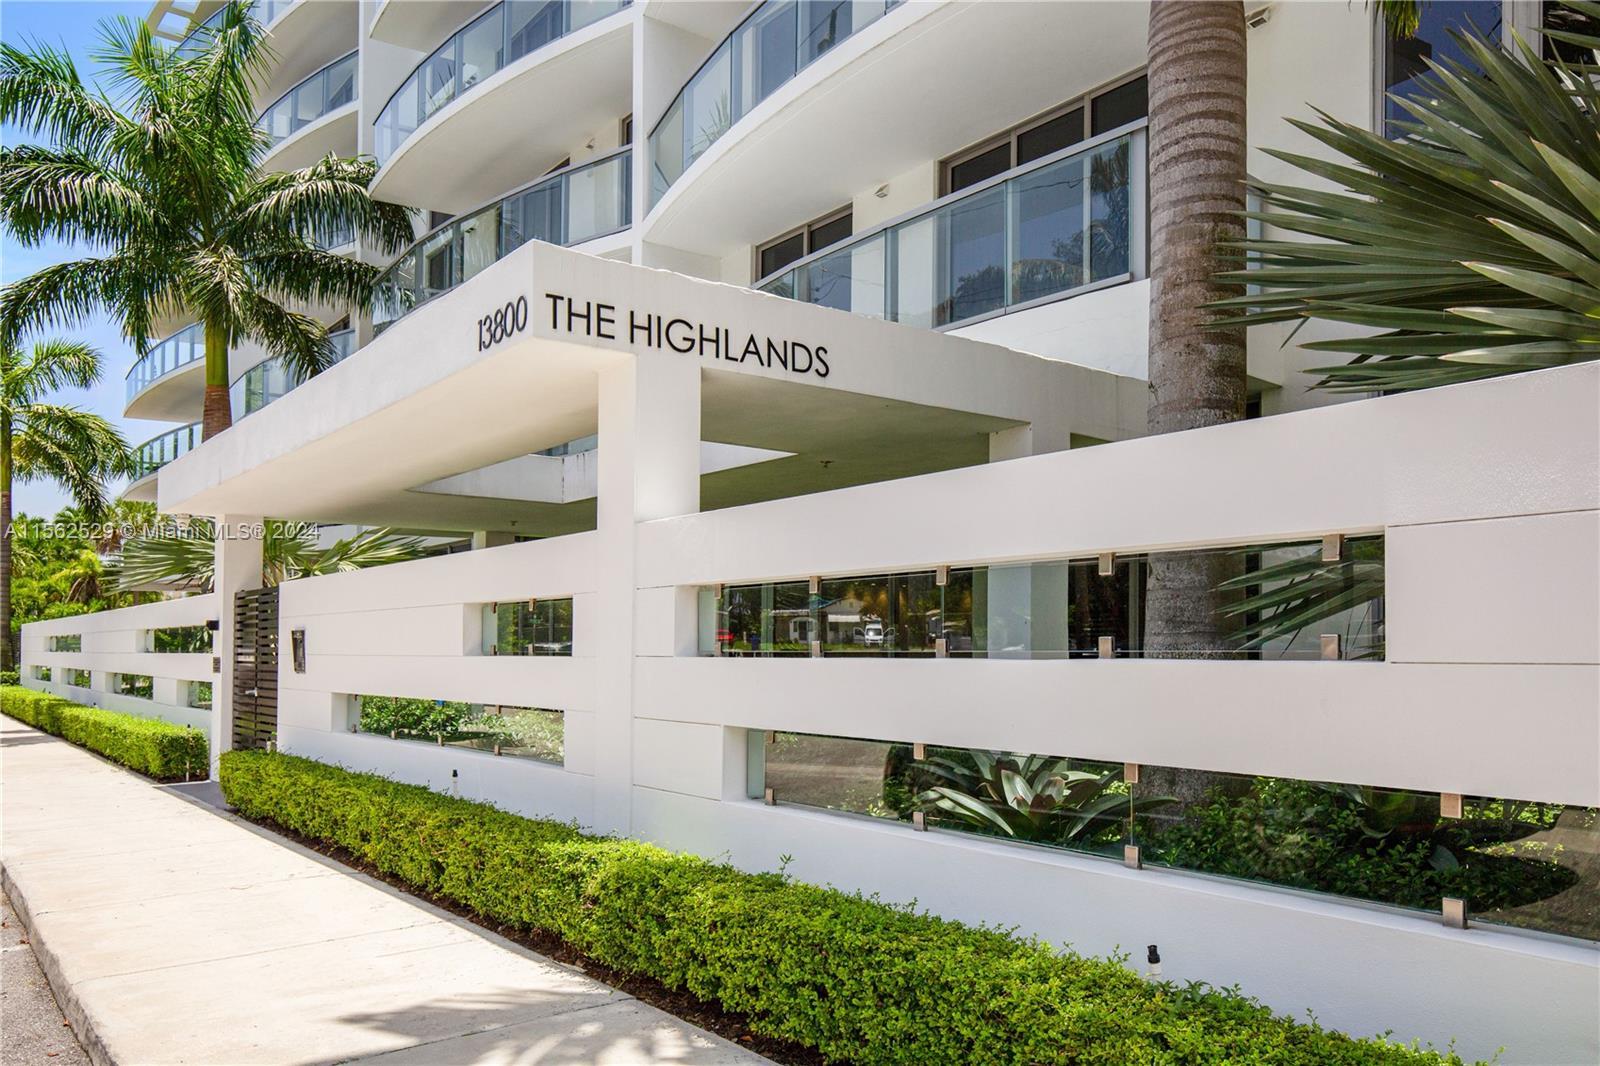 Photo of 13800 Highland Dr #202 in North Miami Beach, FL